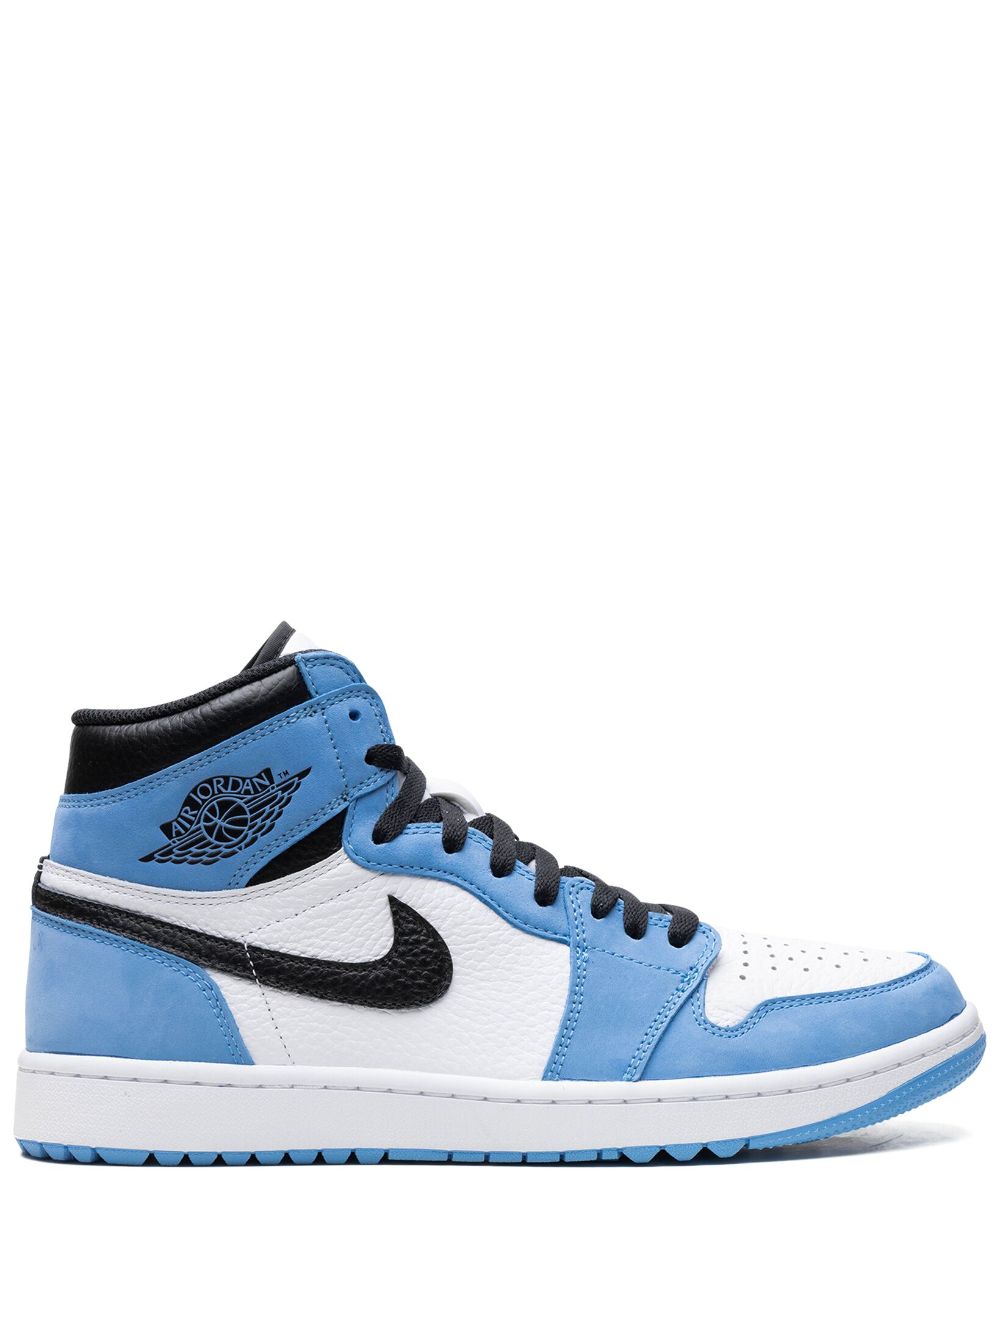 Jordan Air 1 High Golf "University Blue" sneakers